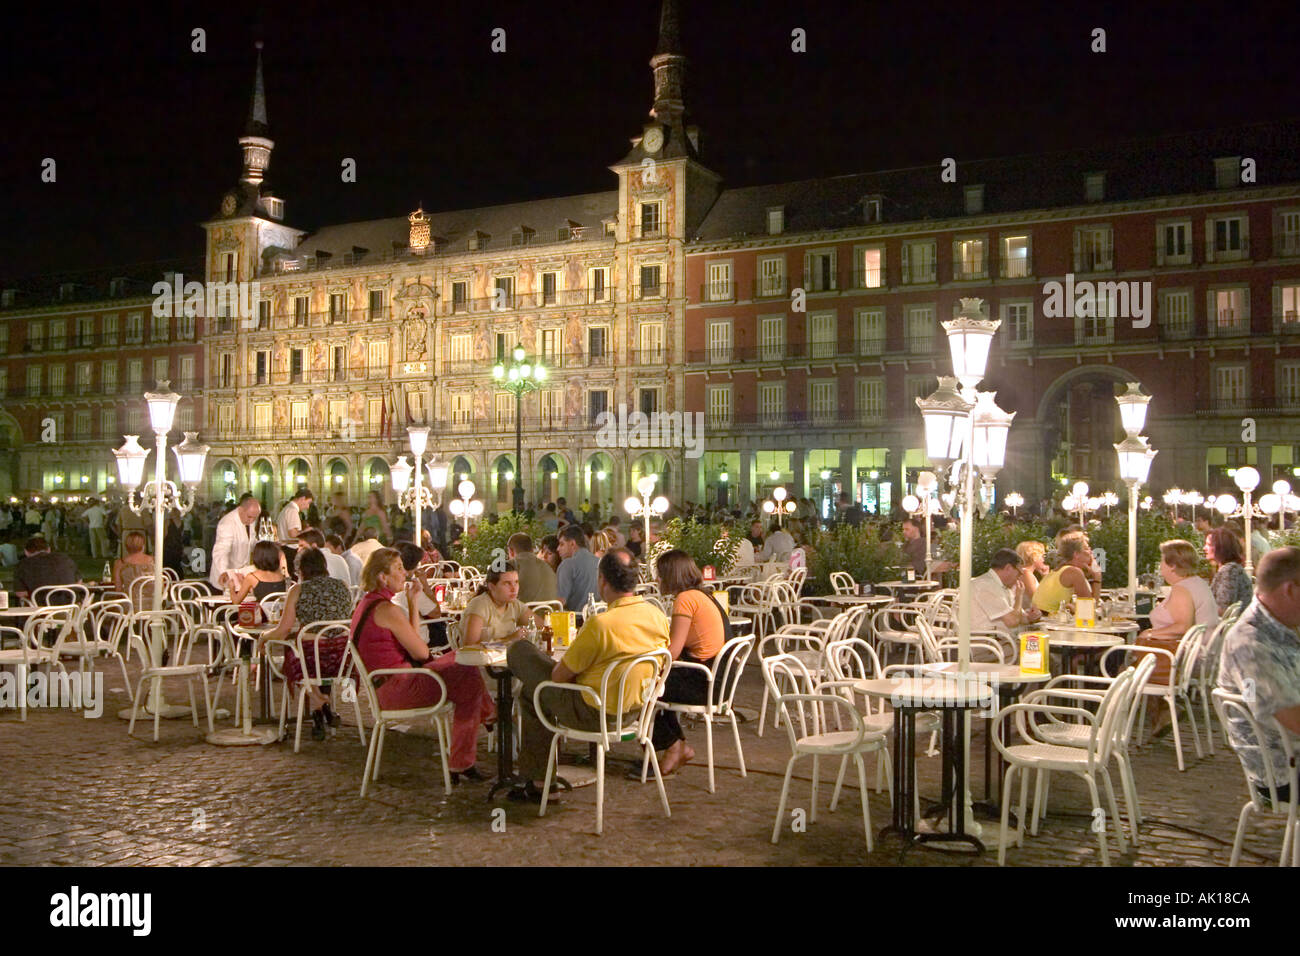 Restaurant at night, Plaza Mayor, Madrid, Spain Stock Photo